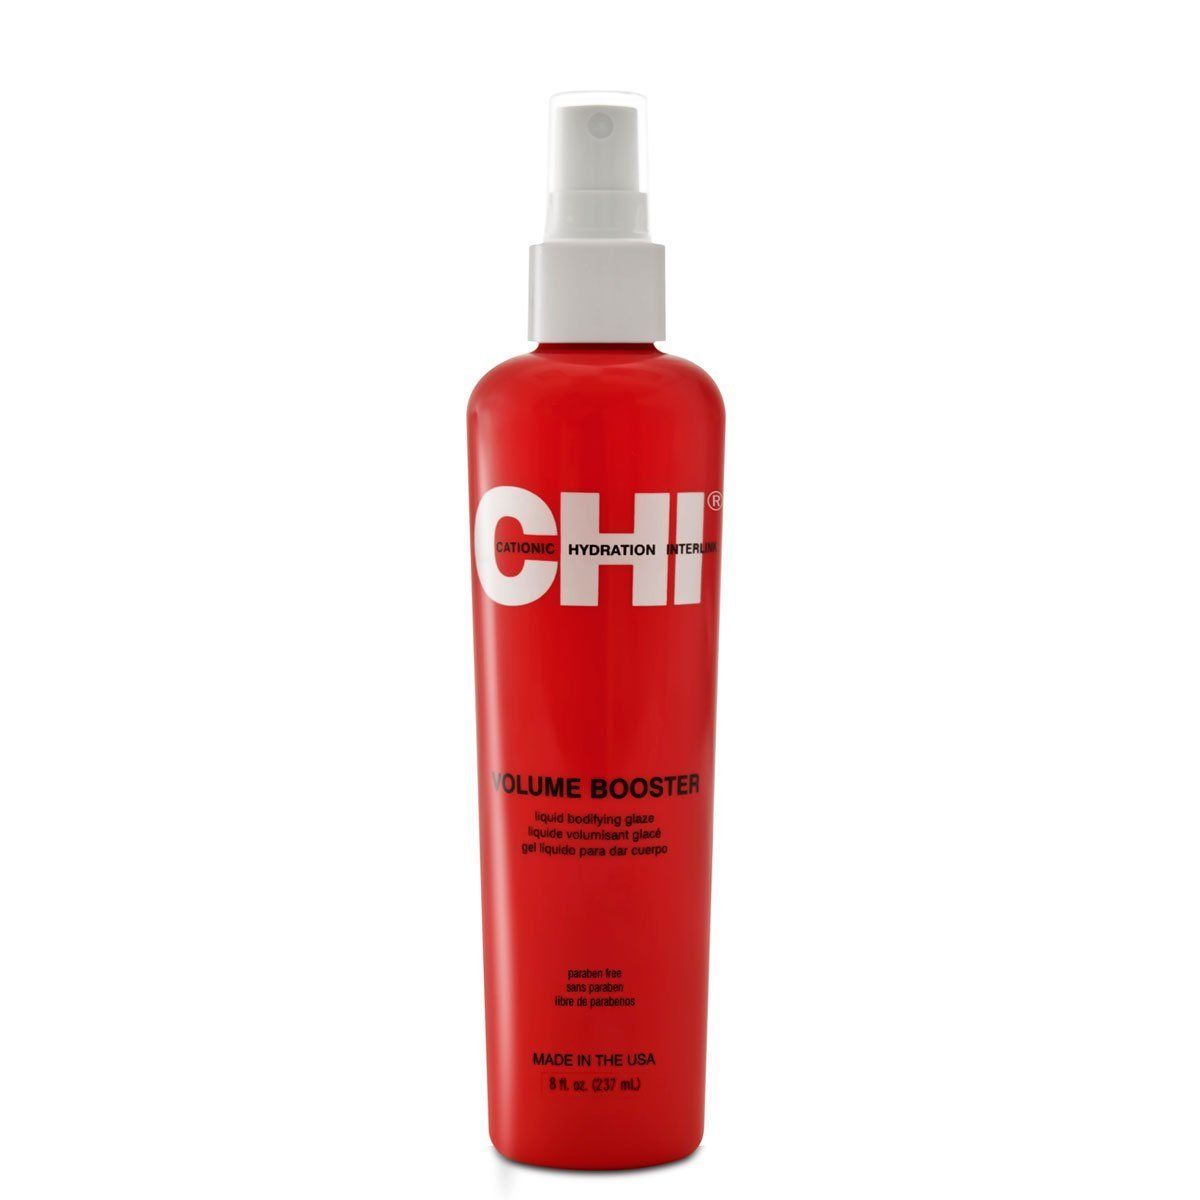 Спрей для укладки волос CHI Infra Volume Booster для прикорневого объема, 237 мл